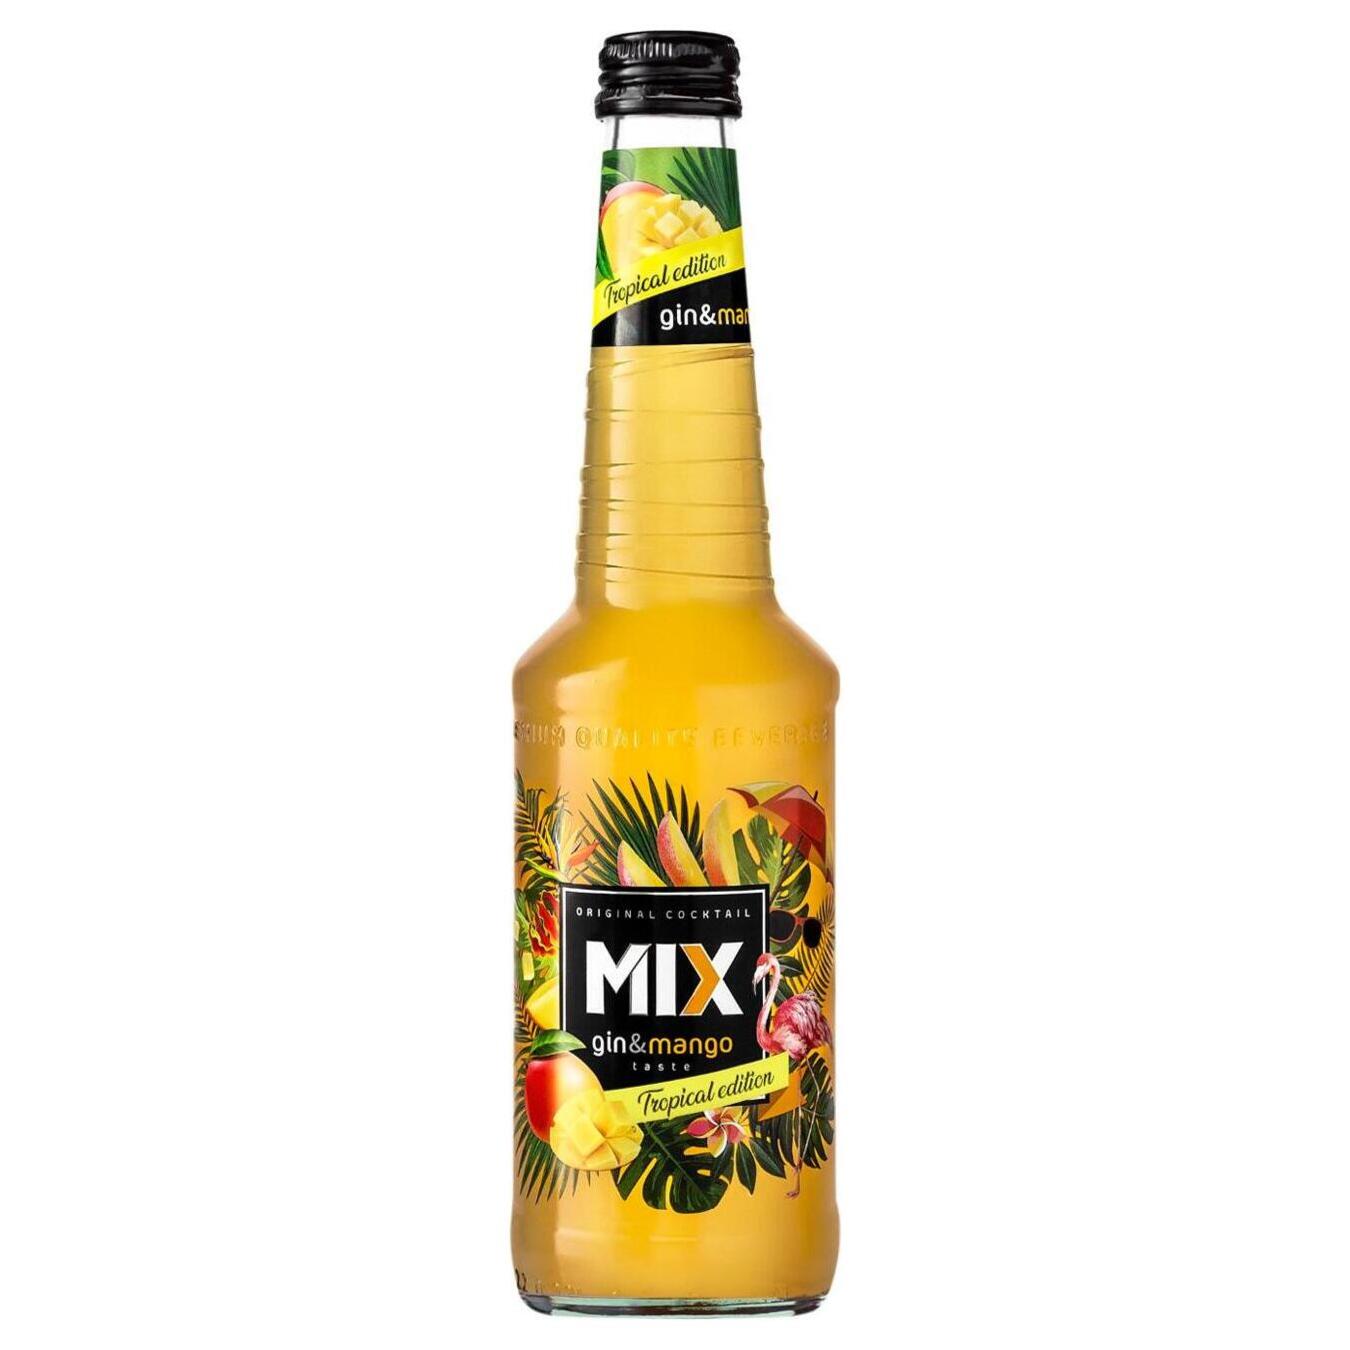 Low-alcohol drink MIX gin mango 4% 0.33l glass